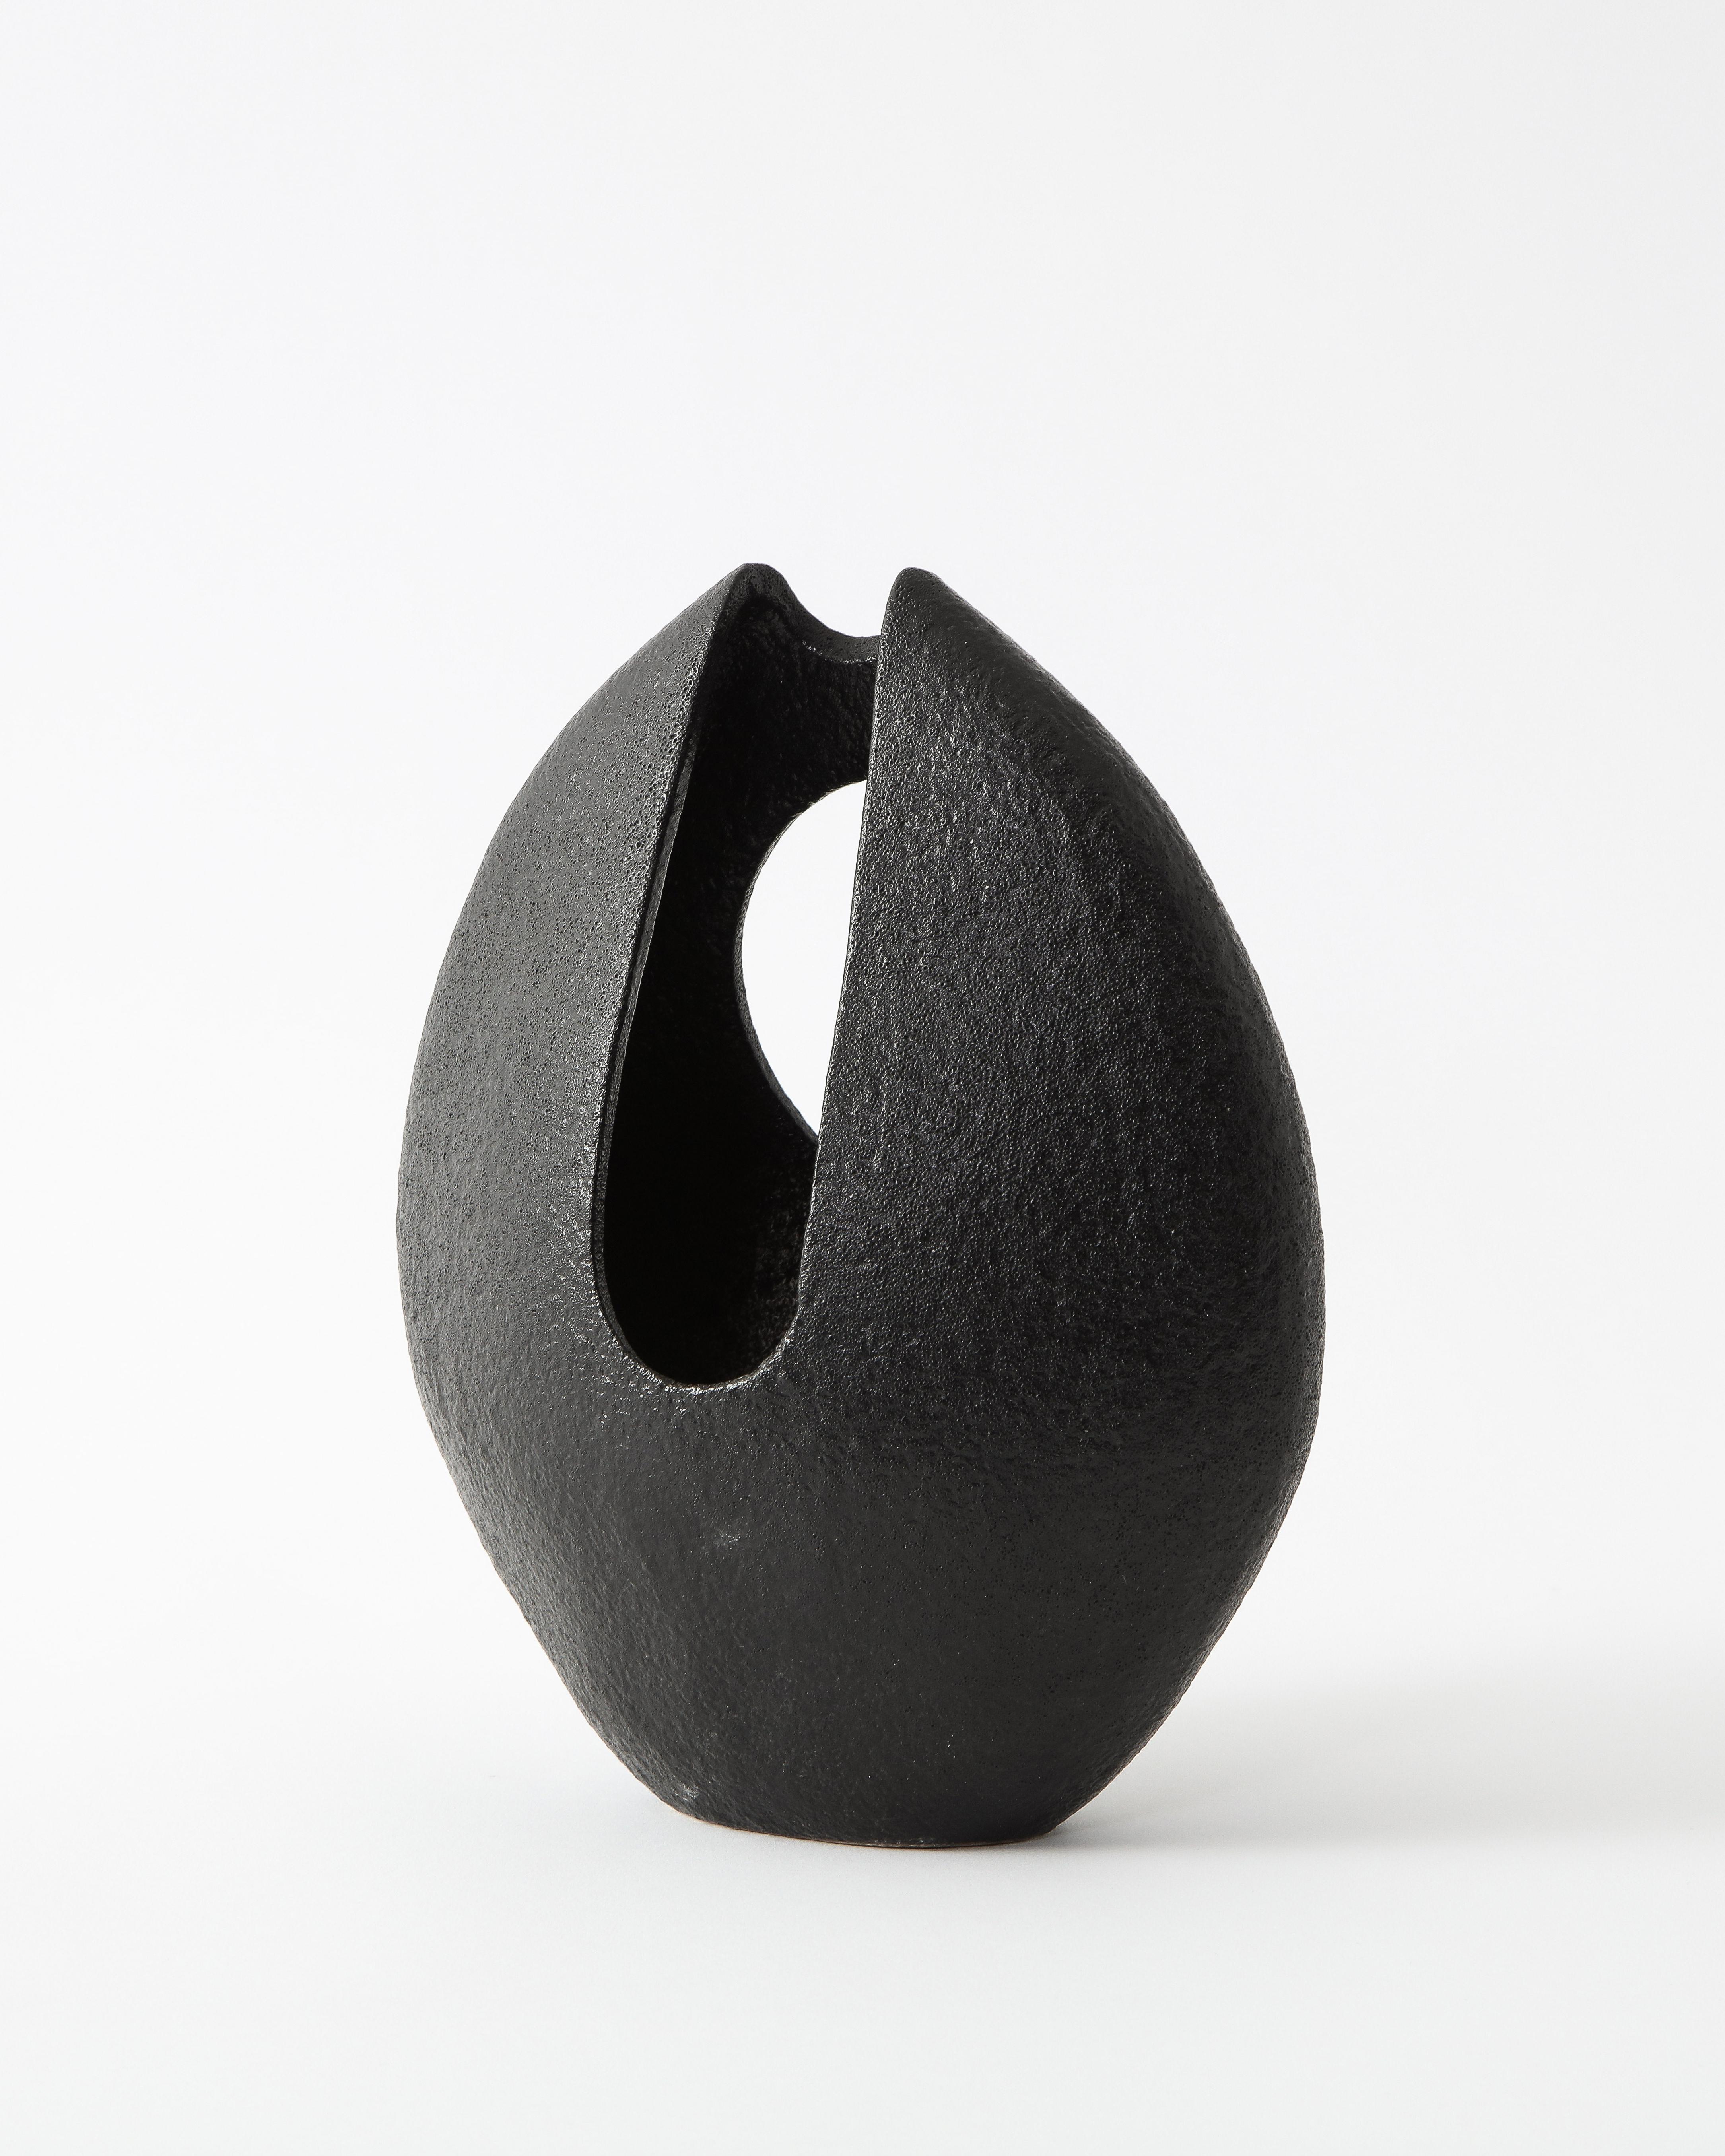 Asymmetrical Almond-Shaped Black Textured Japanese Ceramic Vessel 1